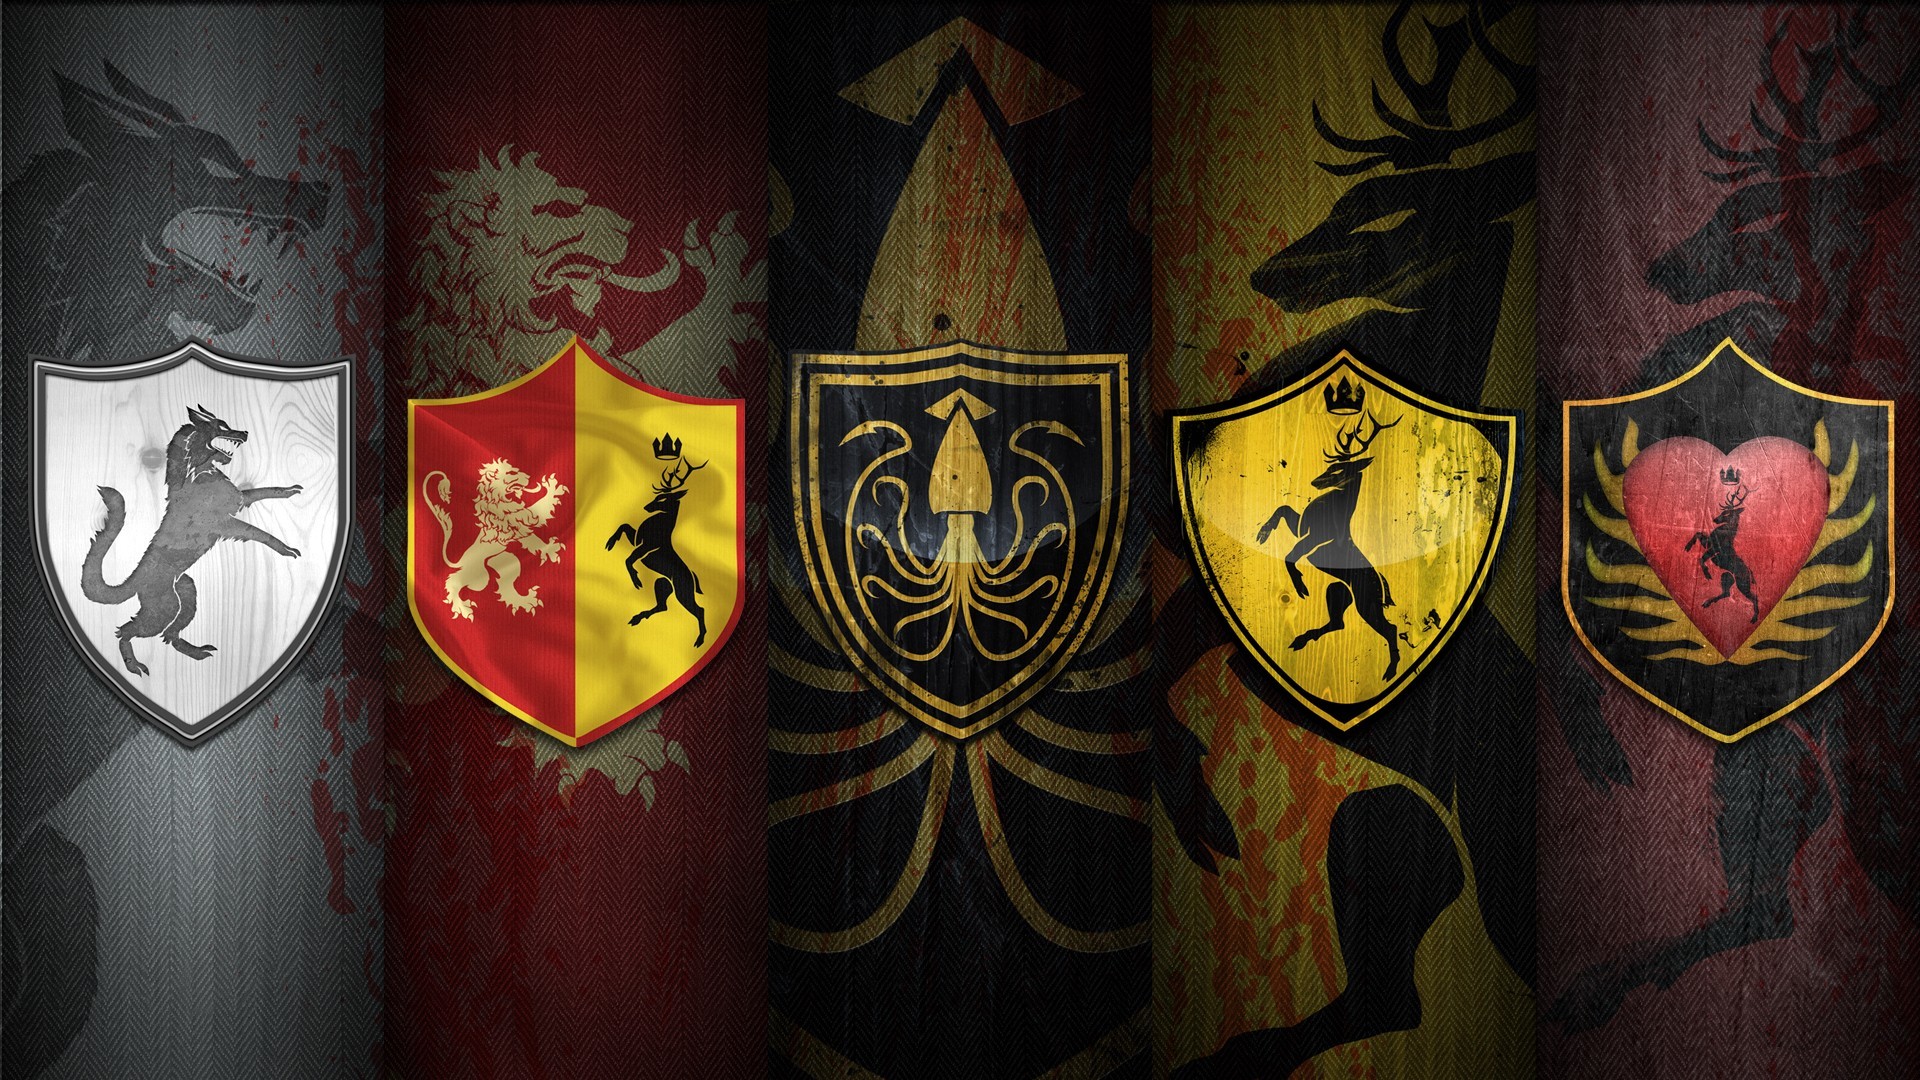 1920x1080 Game of Thrones emblems sigil House Greyjoy House Lannister House Stark House  Baratheon amblem wallpaper